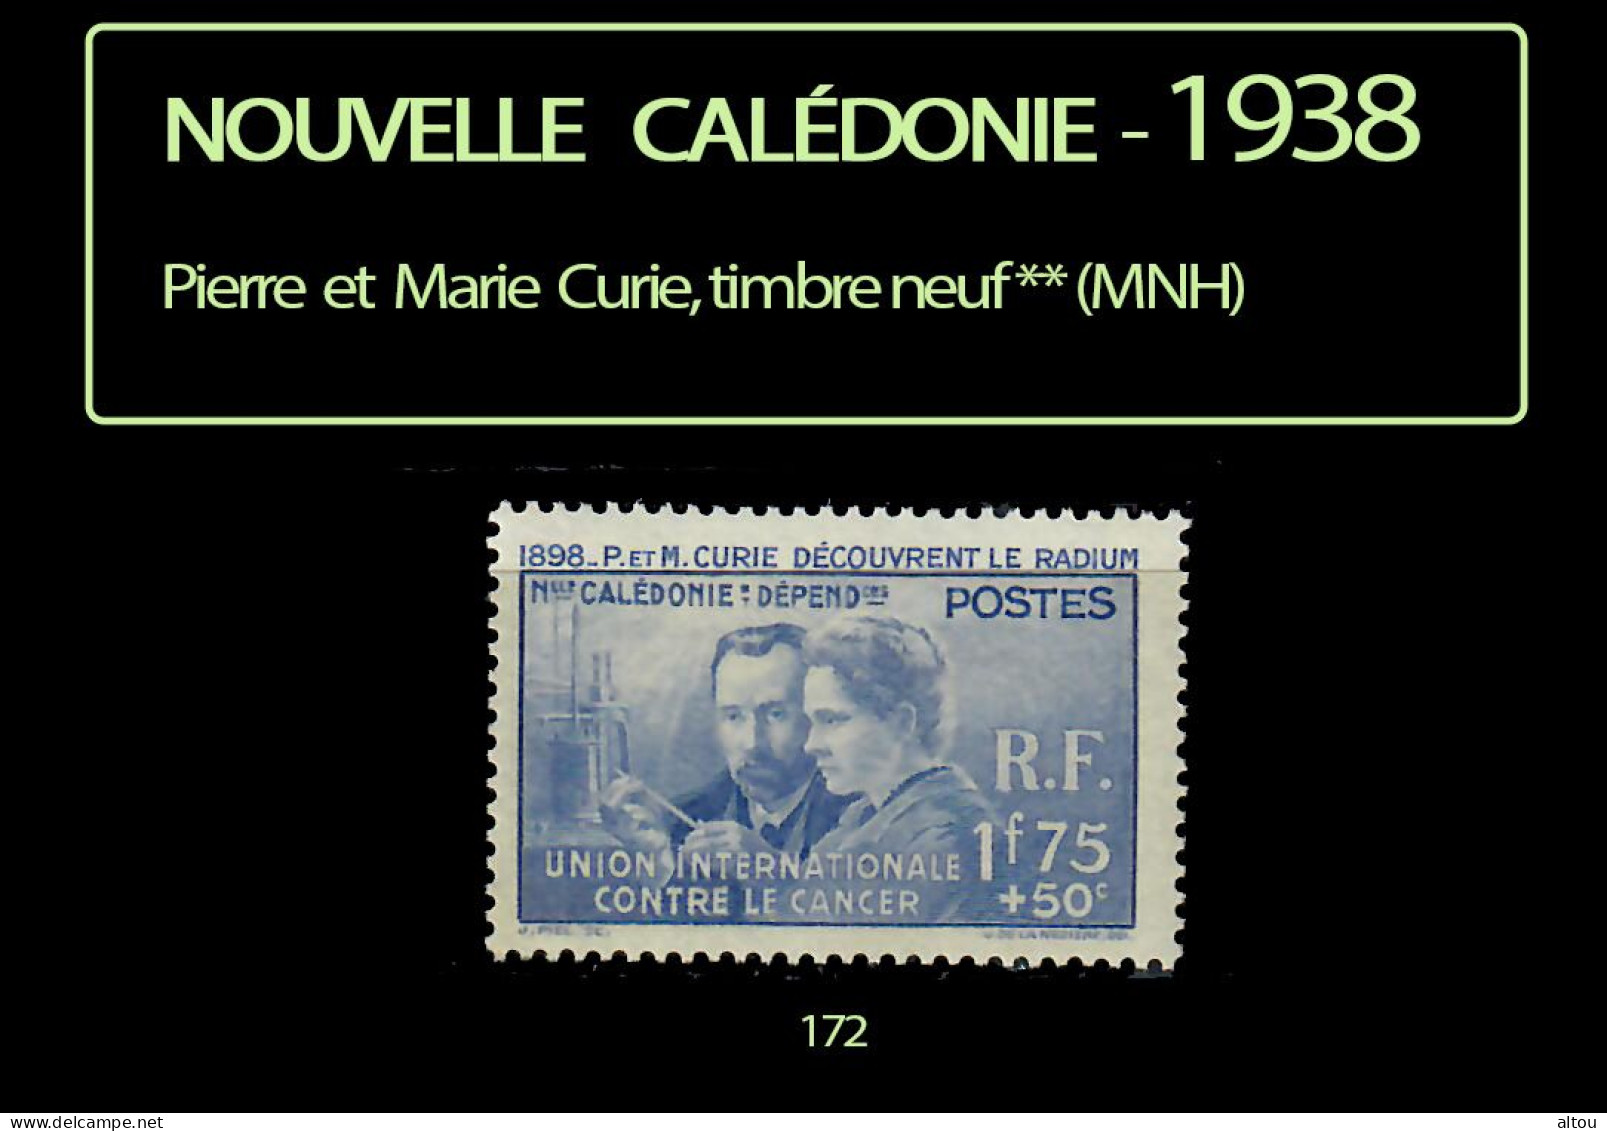 Nouvelle Calédonie 1938 - Pierre Et Marie Curie - Timbre Neuf ** (MNH) - Unused Stamps